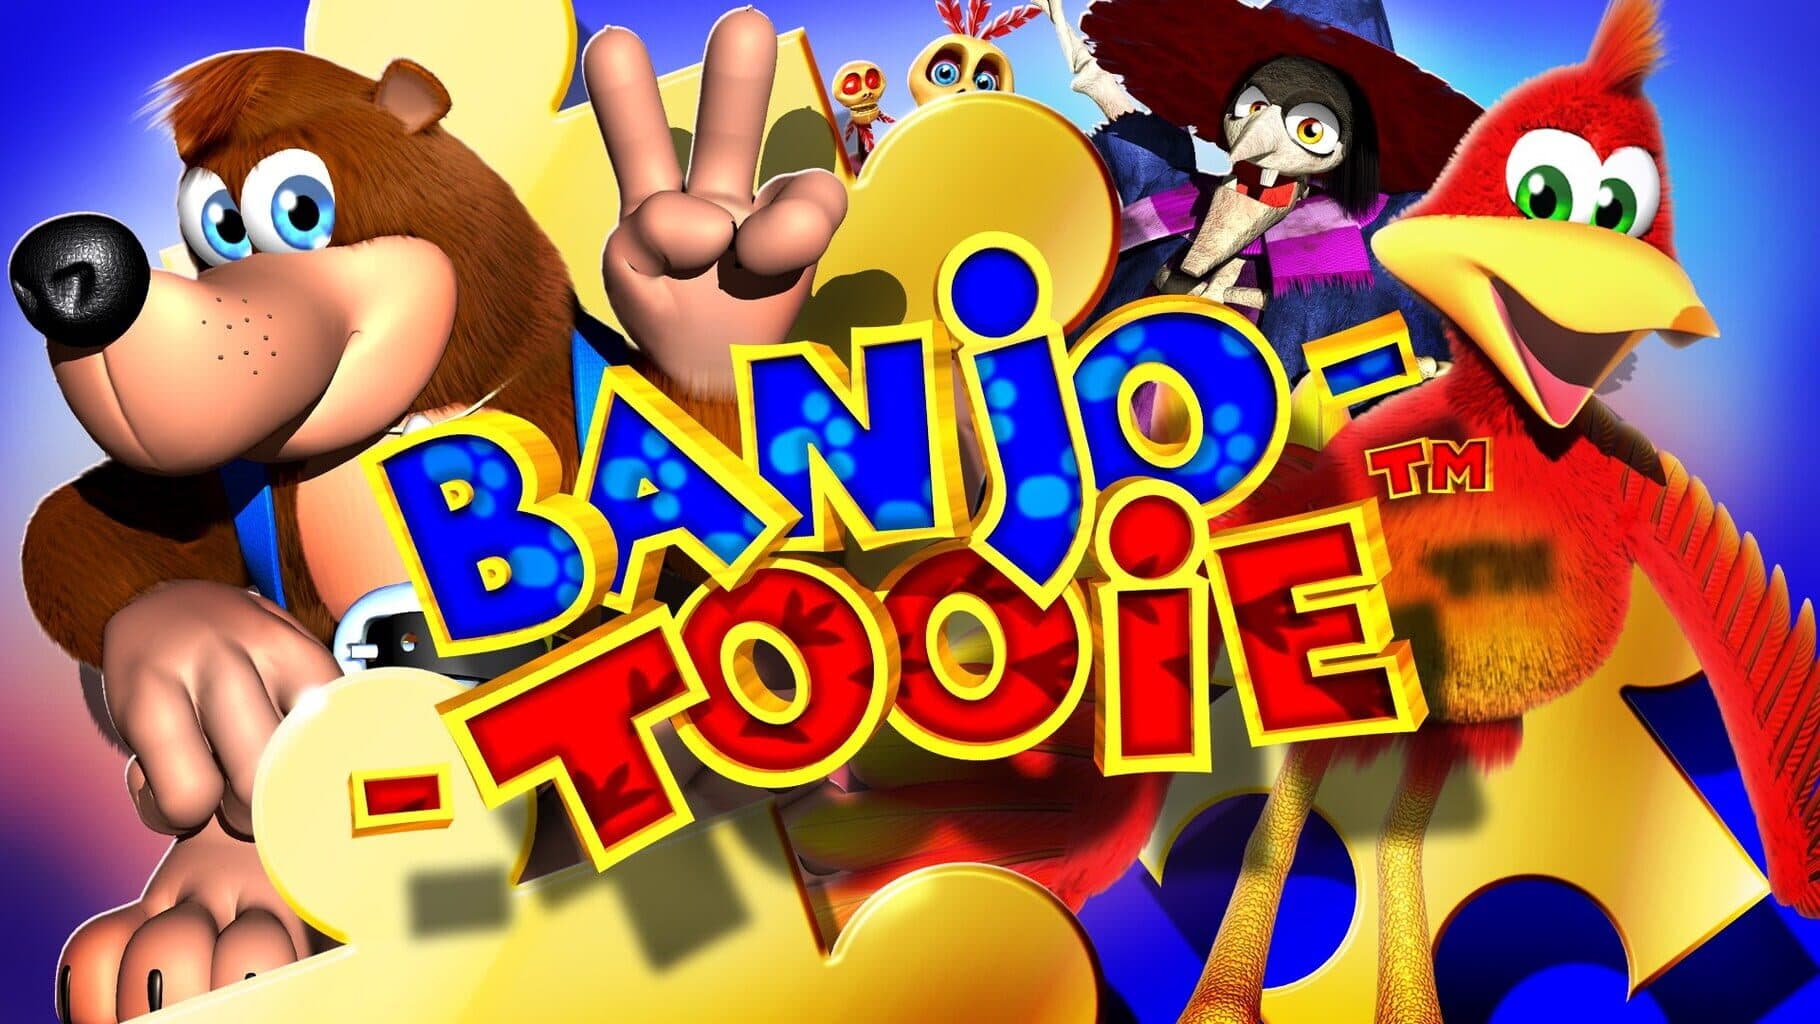 Banjo-Tooie Image